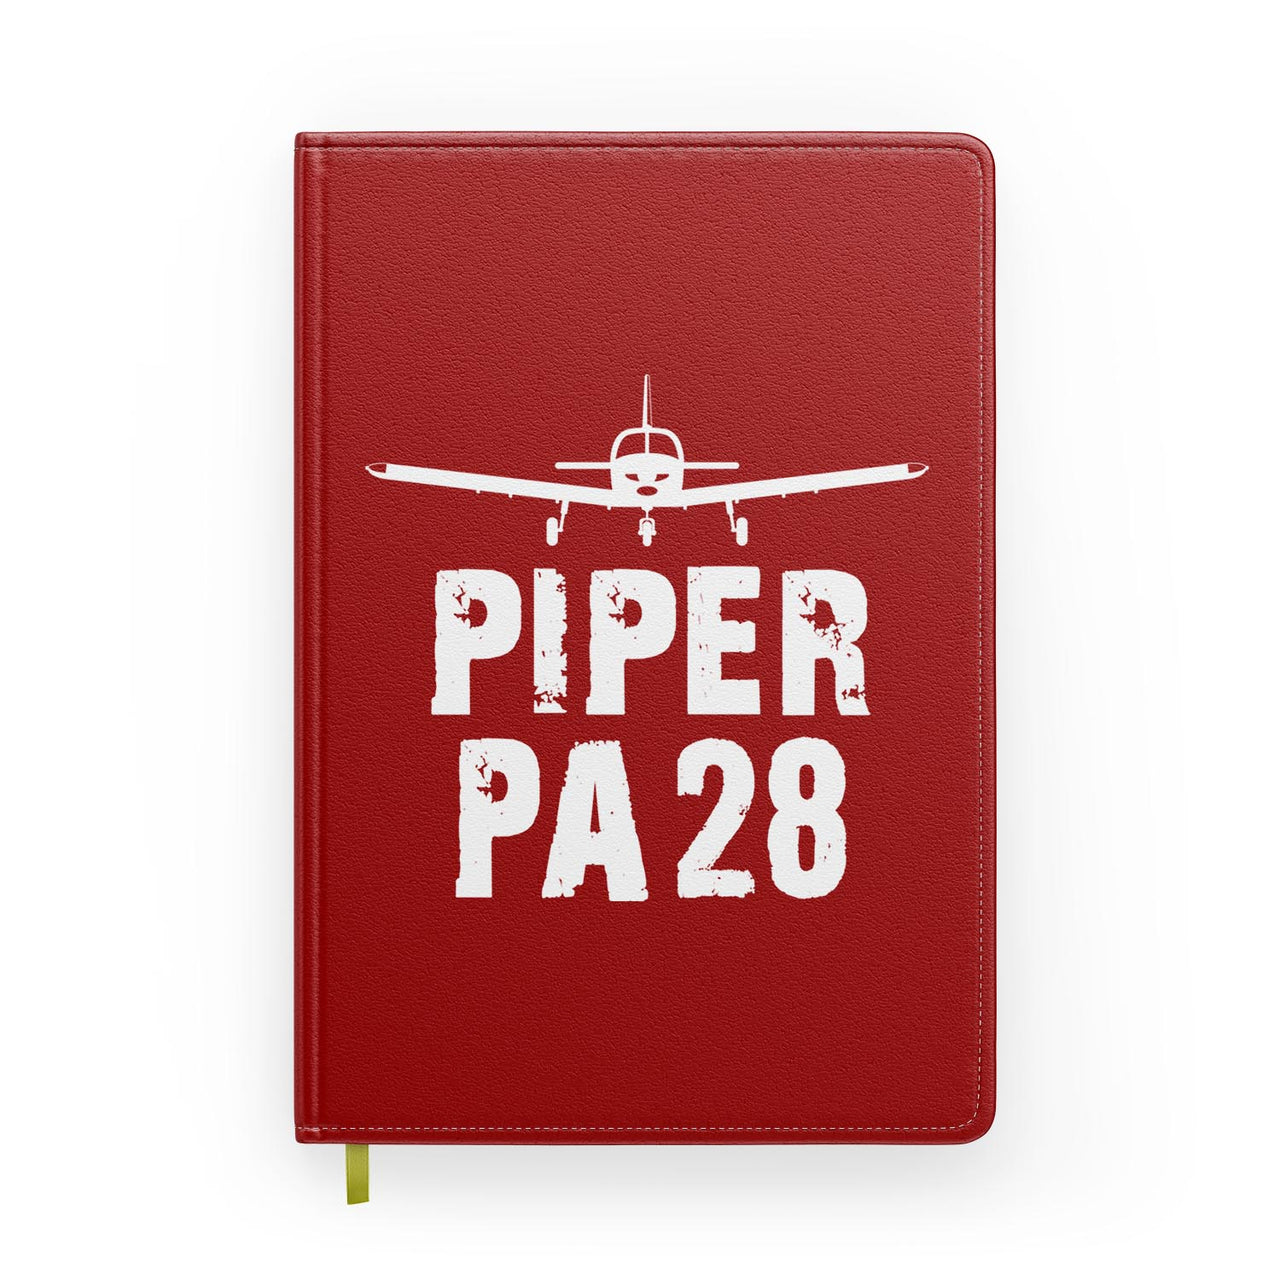 Piper PA28 & Plane Designed Notebooks